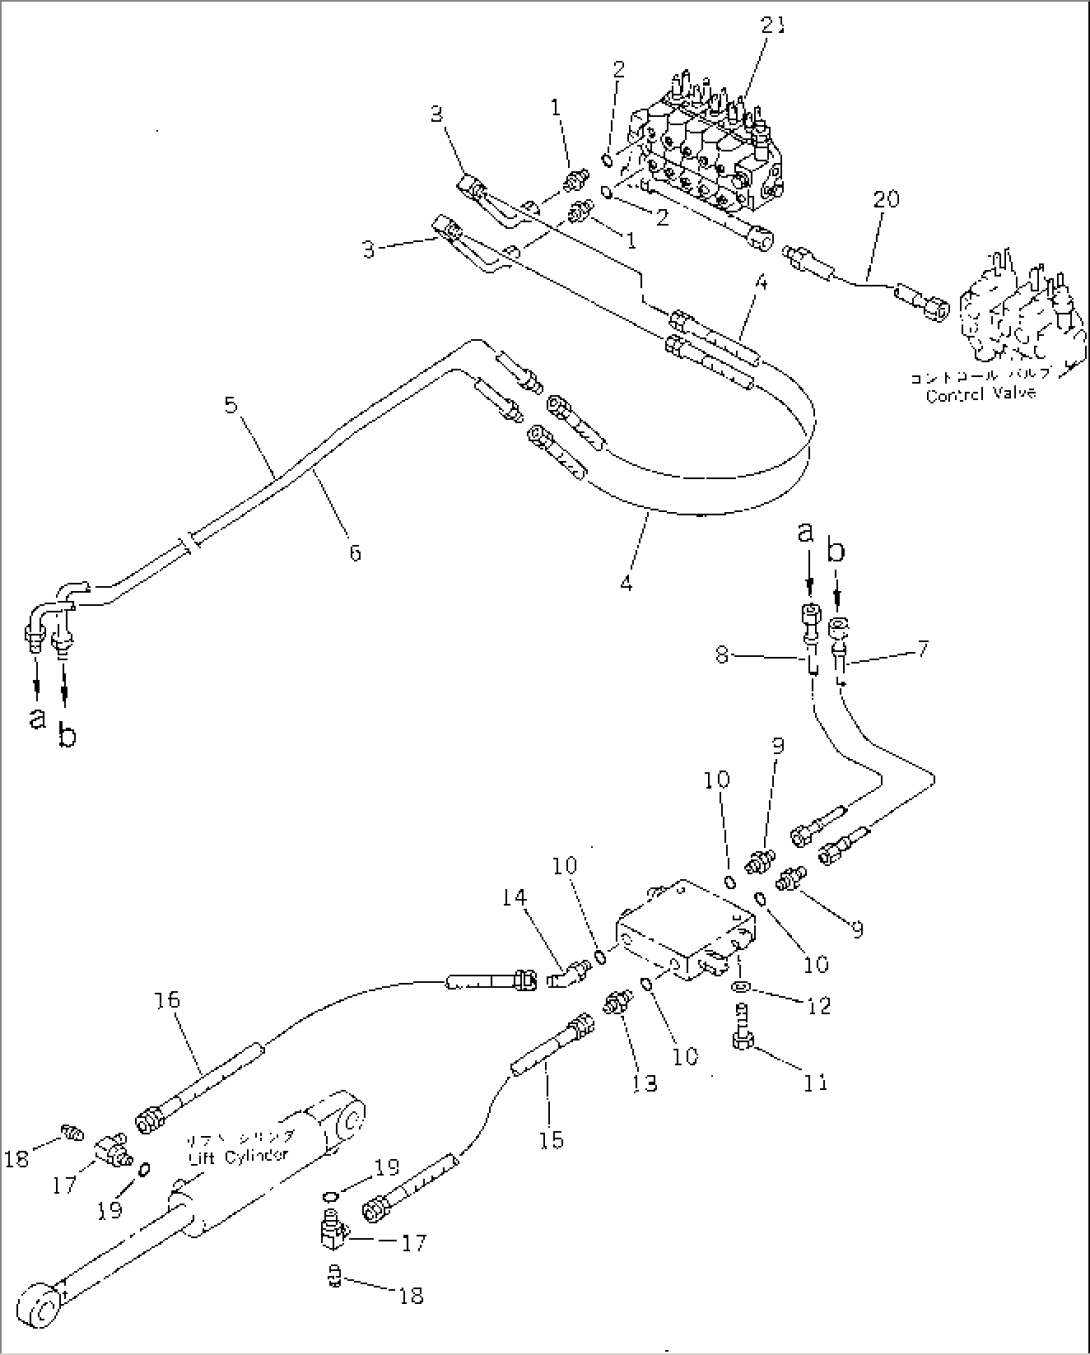 HYDRAULIC PIPING (SCARIFIER CYLINDER LINE)